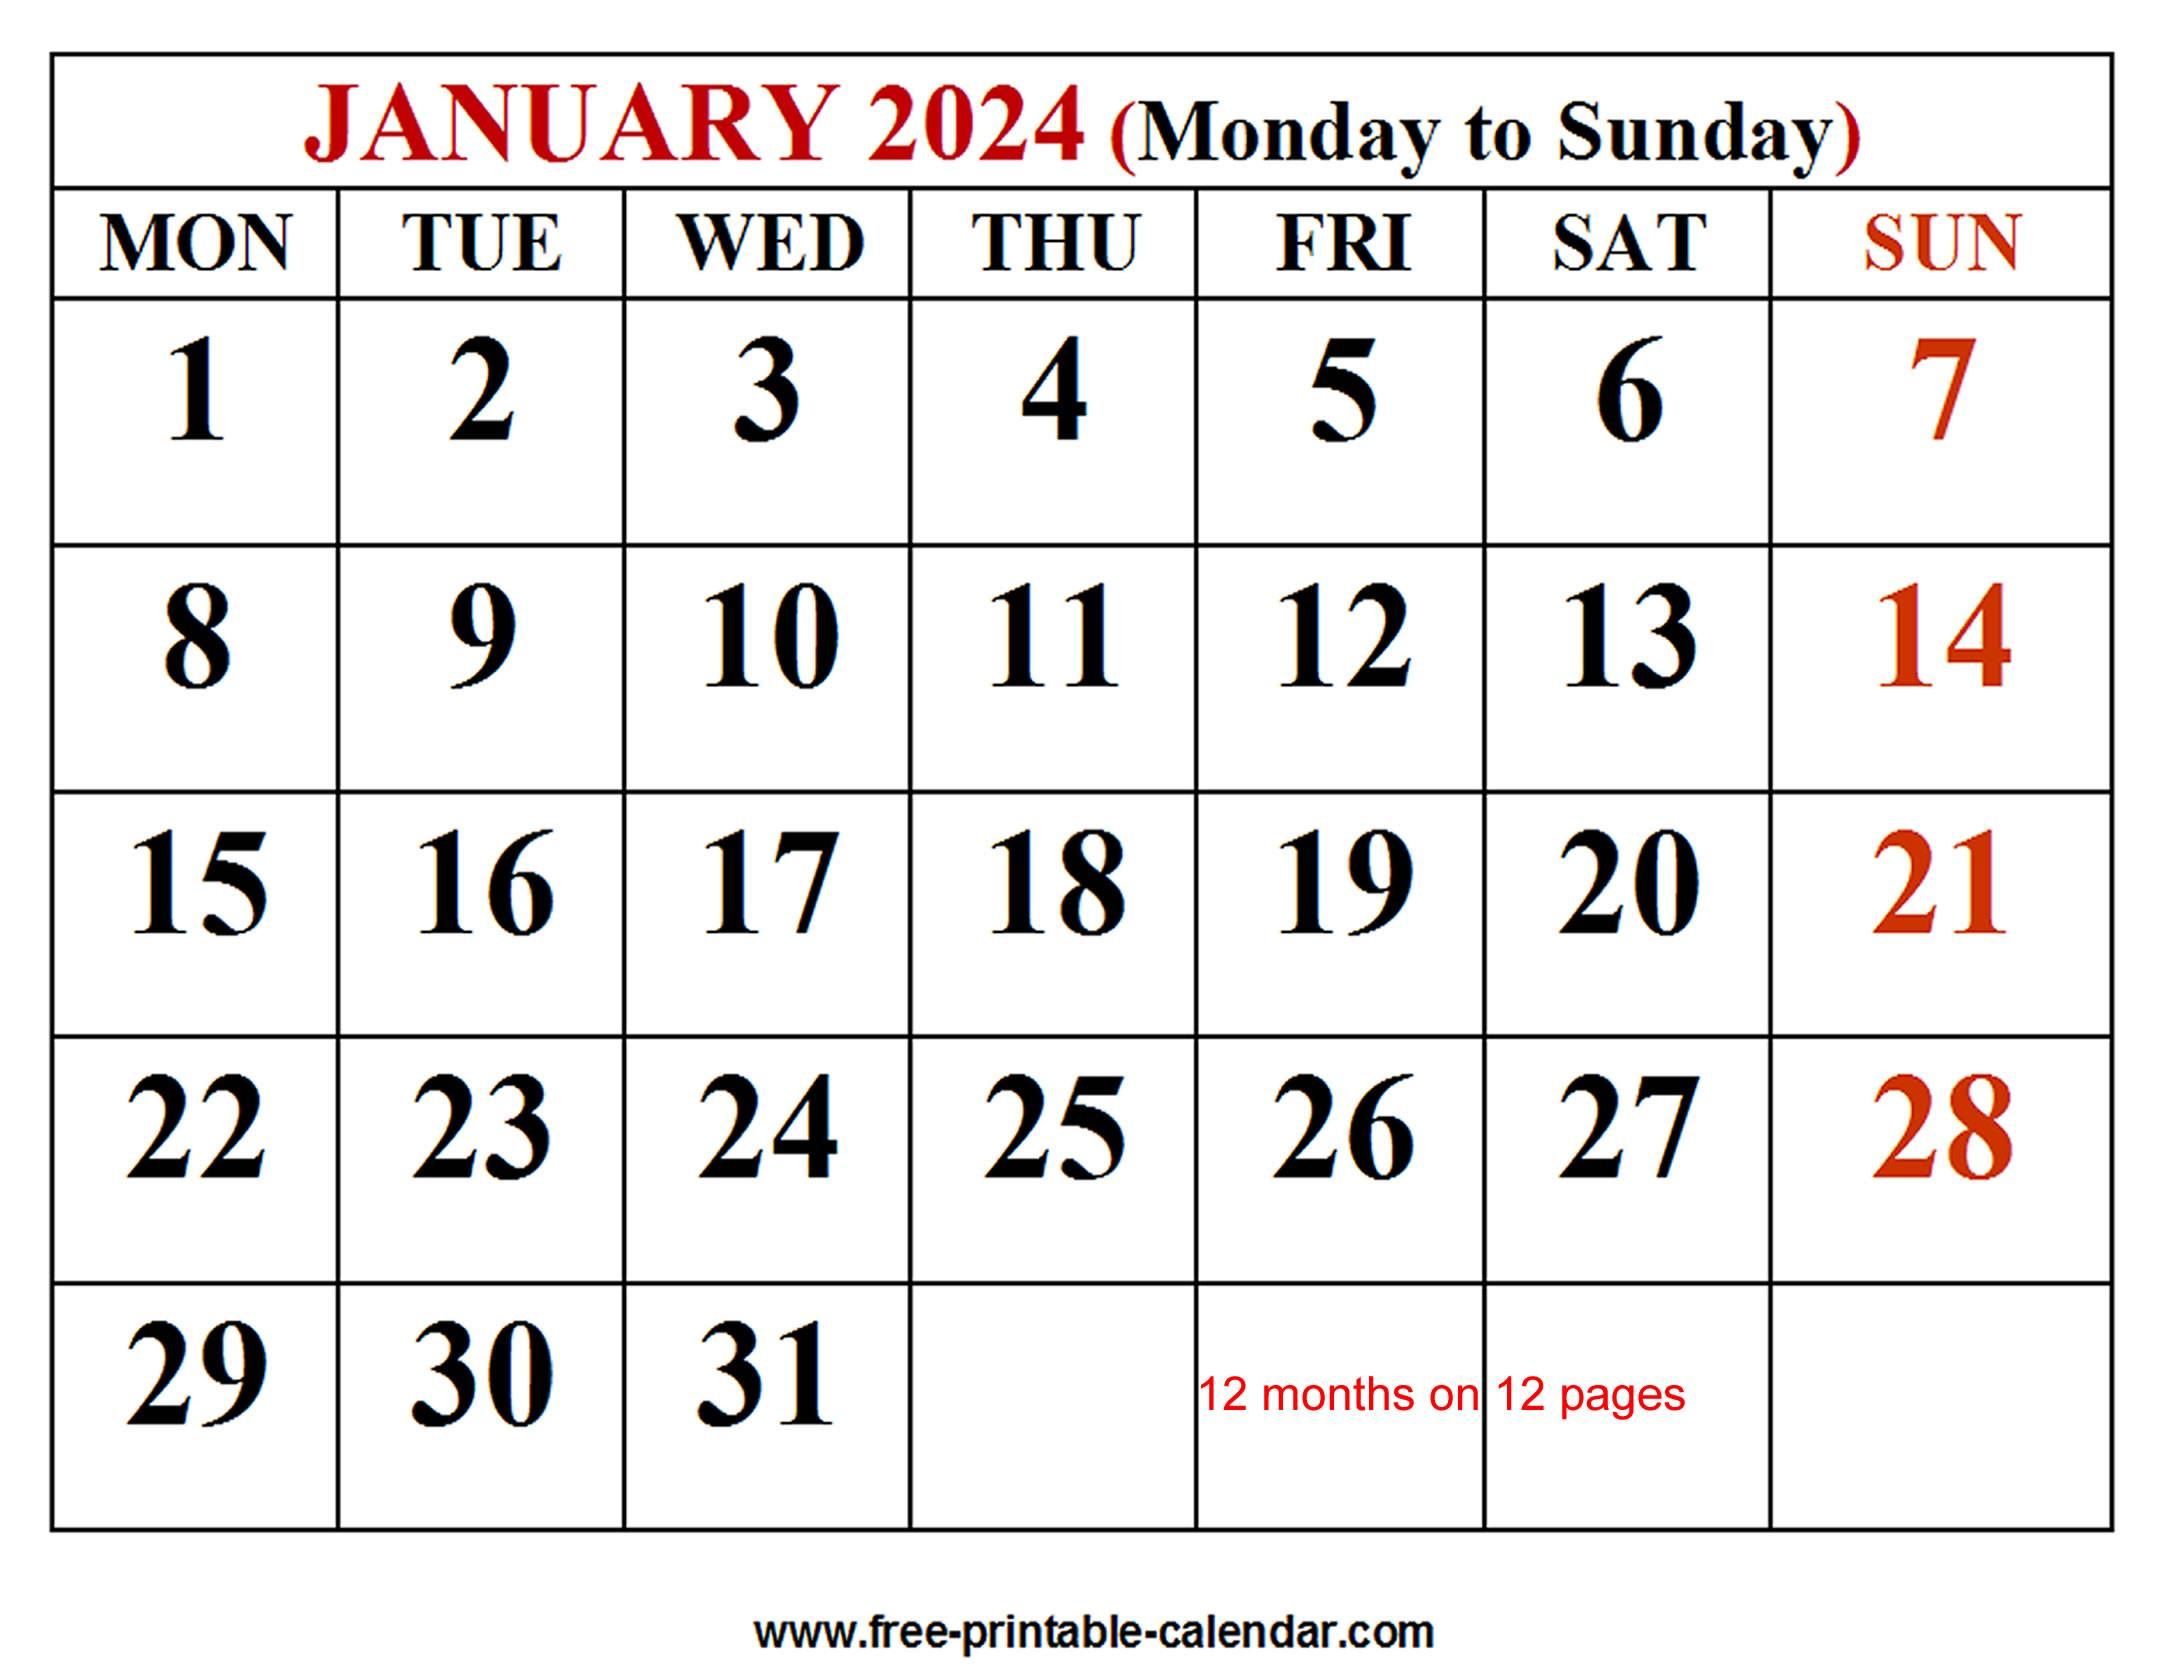 2024 Calendar Template - Free-Printable-Calendar | Calendar 2024 Template